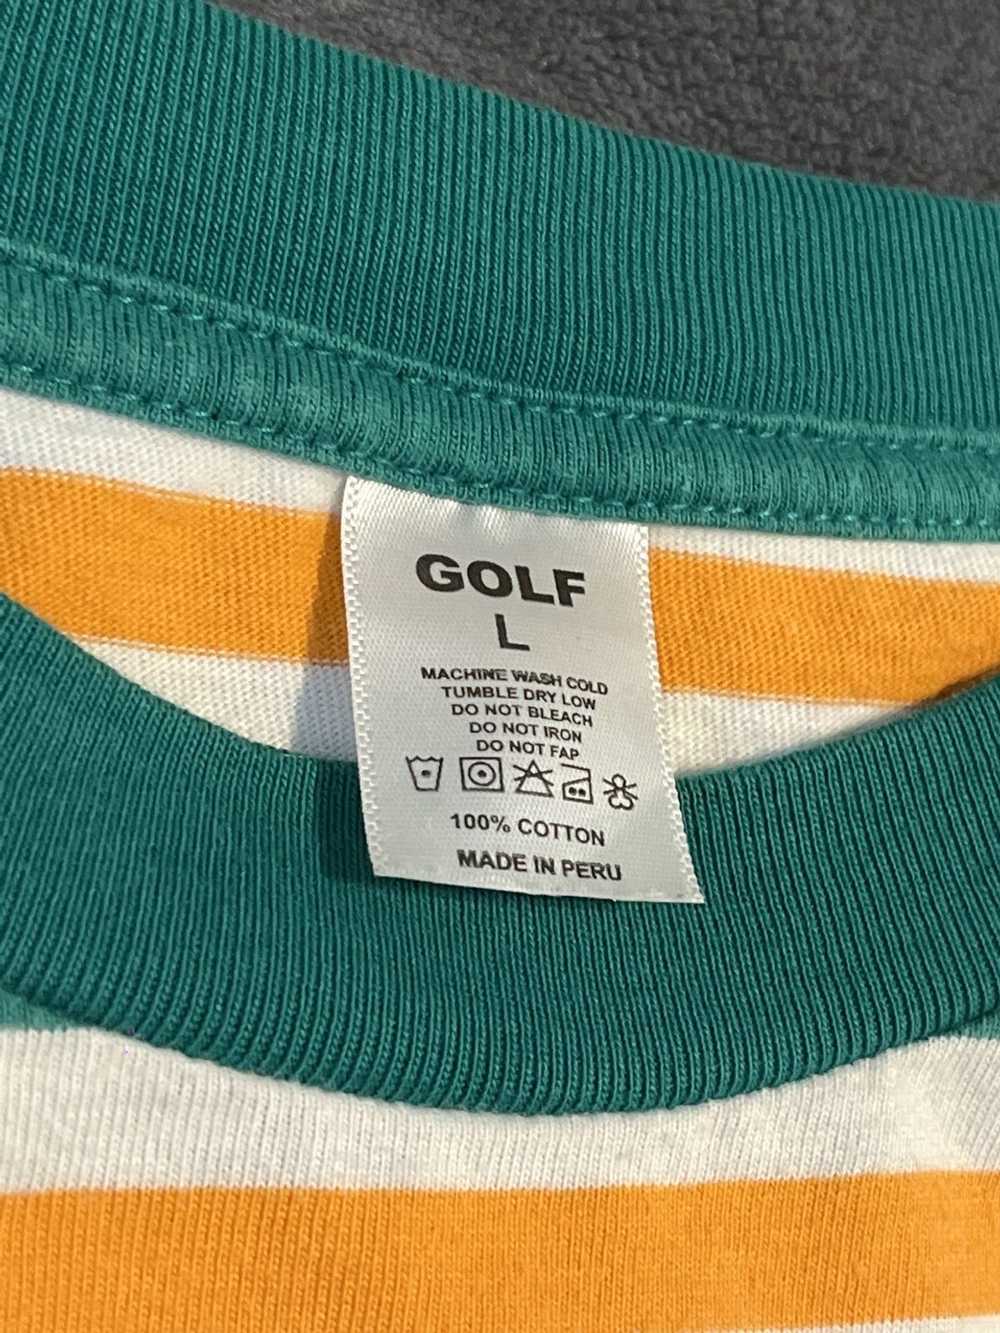 Golf Wang Golf Euro Shirt - image 4